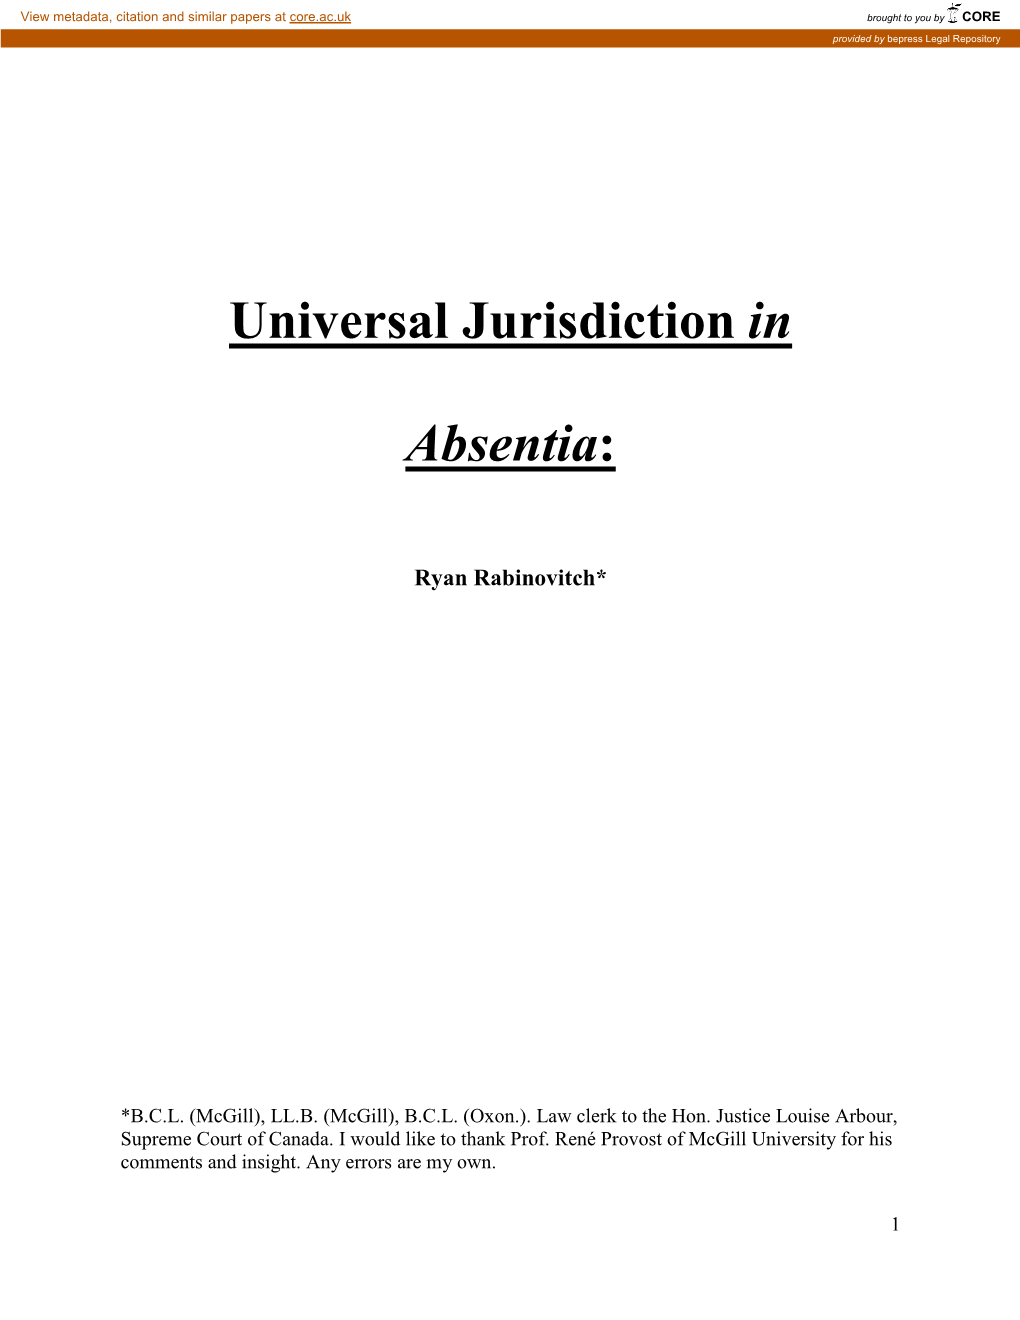 Universal Jurisdiction in Absentia